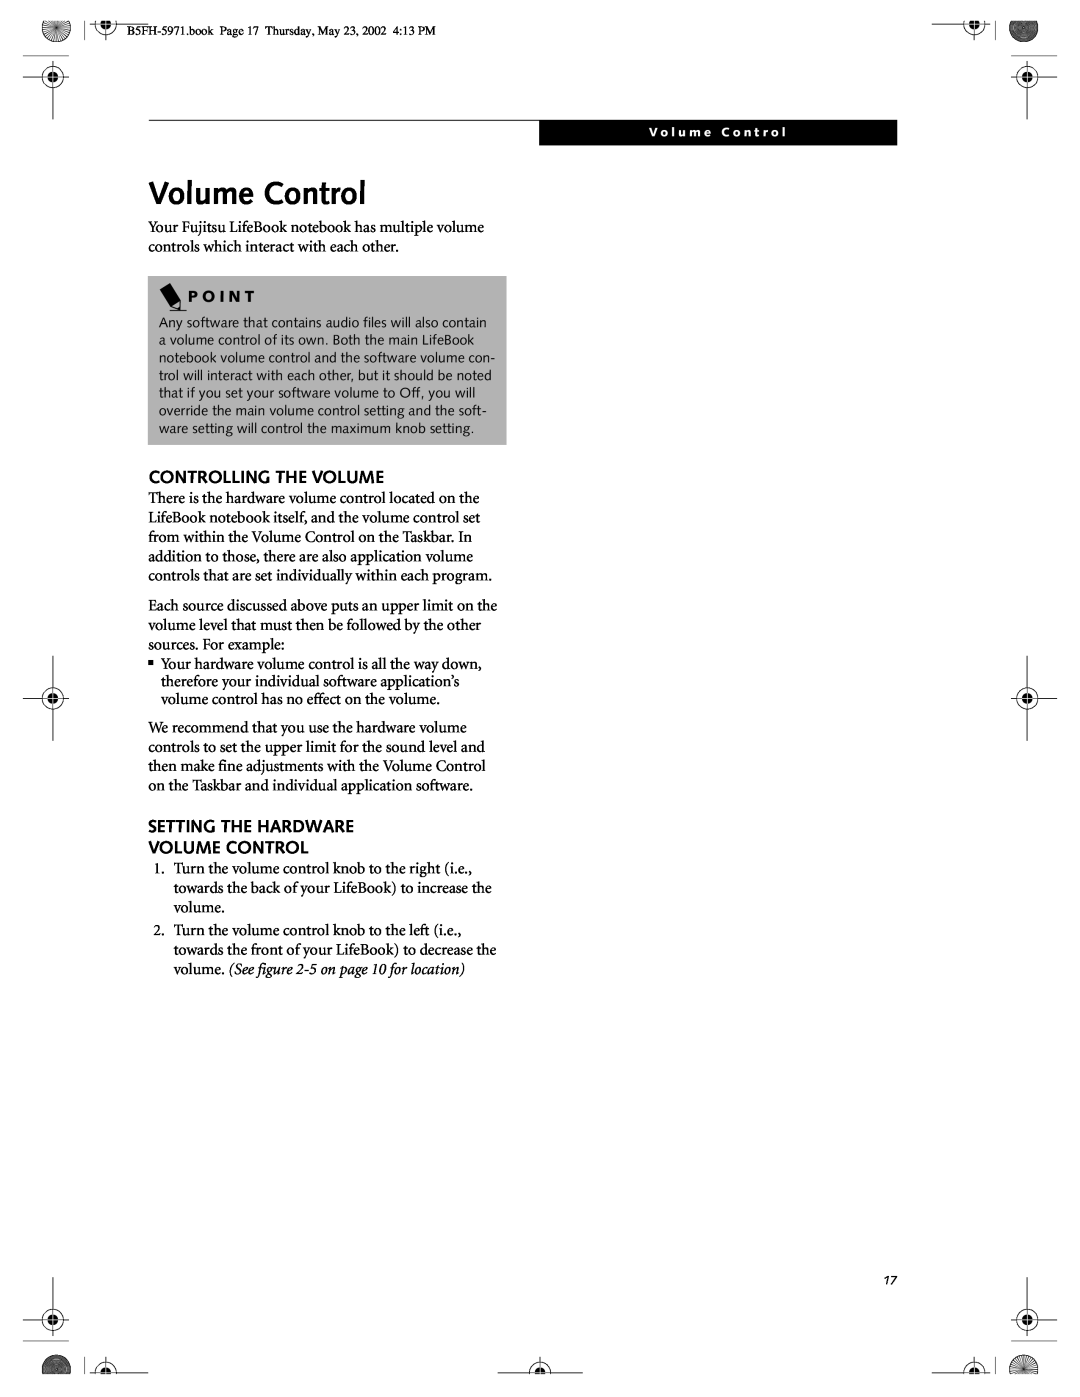 Fujitsu C2010, C2111 manual Controlling The Volume, Setting The Hardware Volume Control, P O I N T 